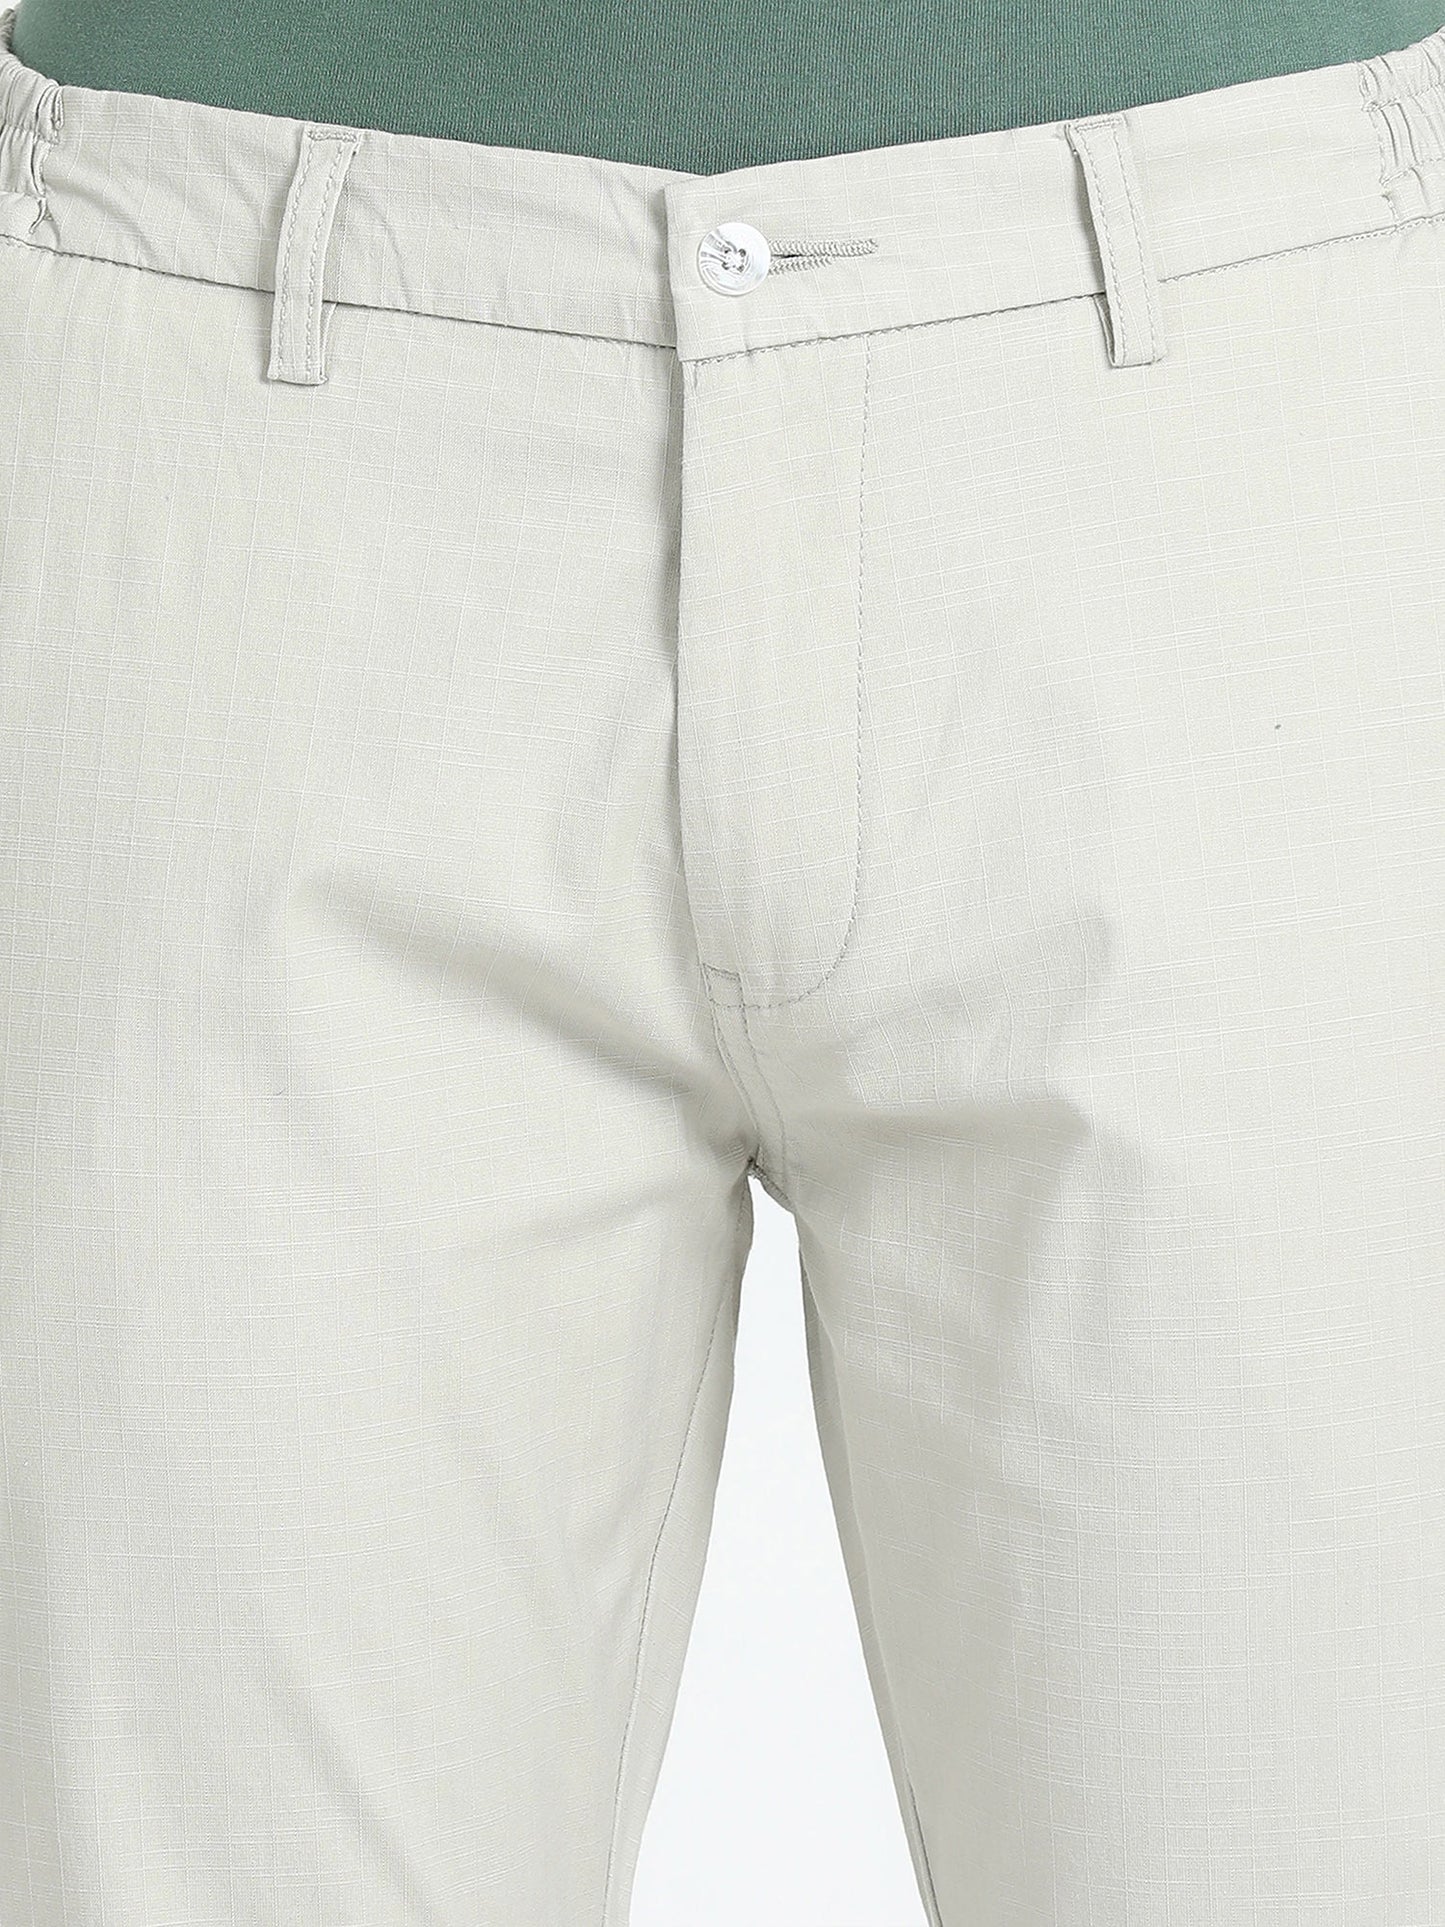 Grey Slim Fit Trouser for Men 